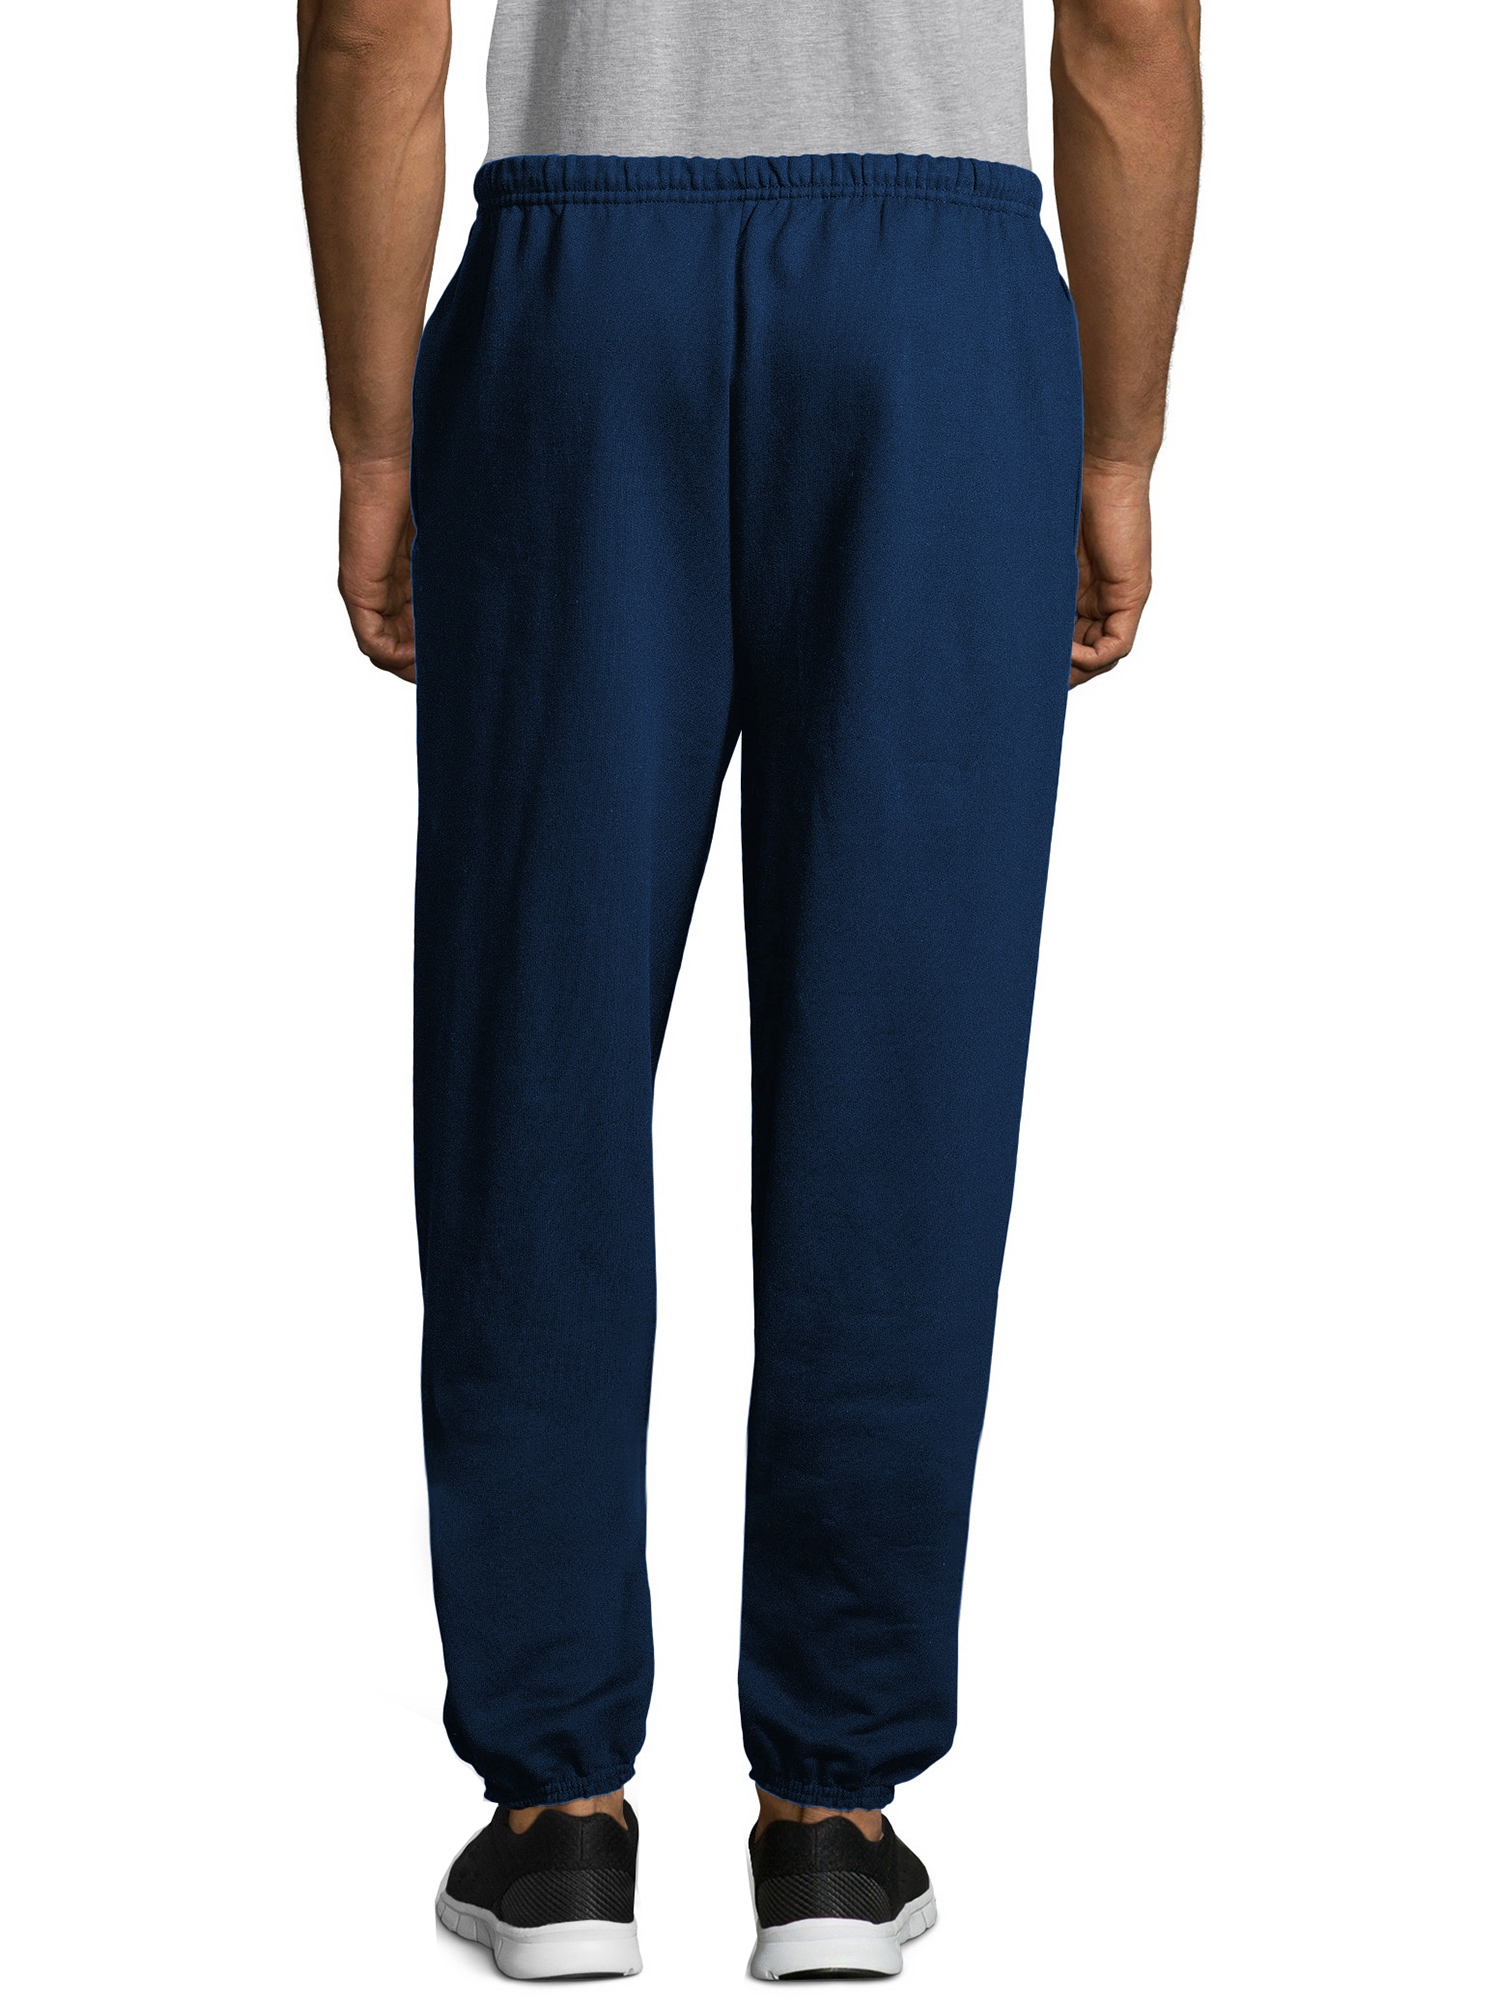 Hanes Sport Men's and Big Men's Ultimate Fleece Sweatpants with Pockets, Sizes S-3XL - image 2 of 5